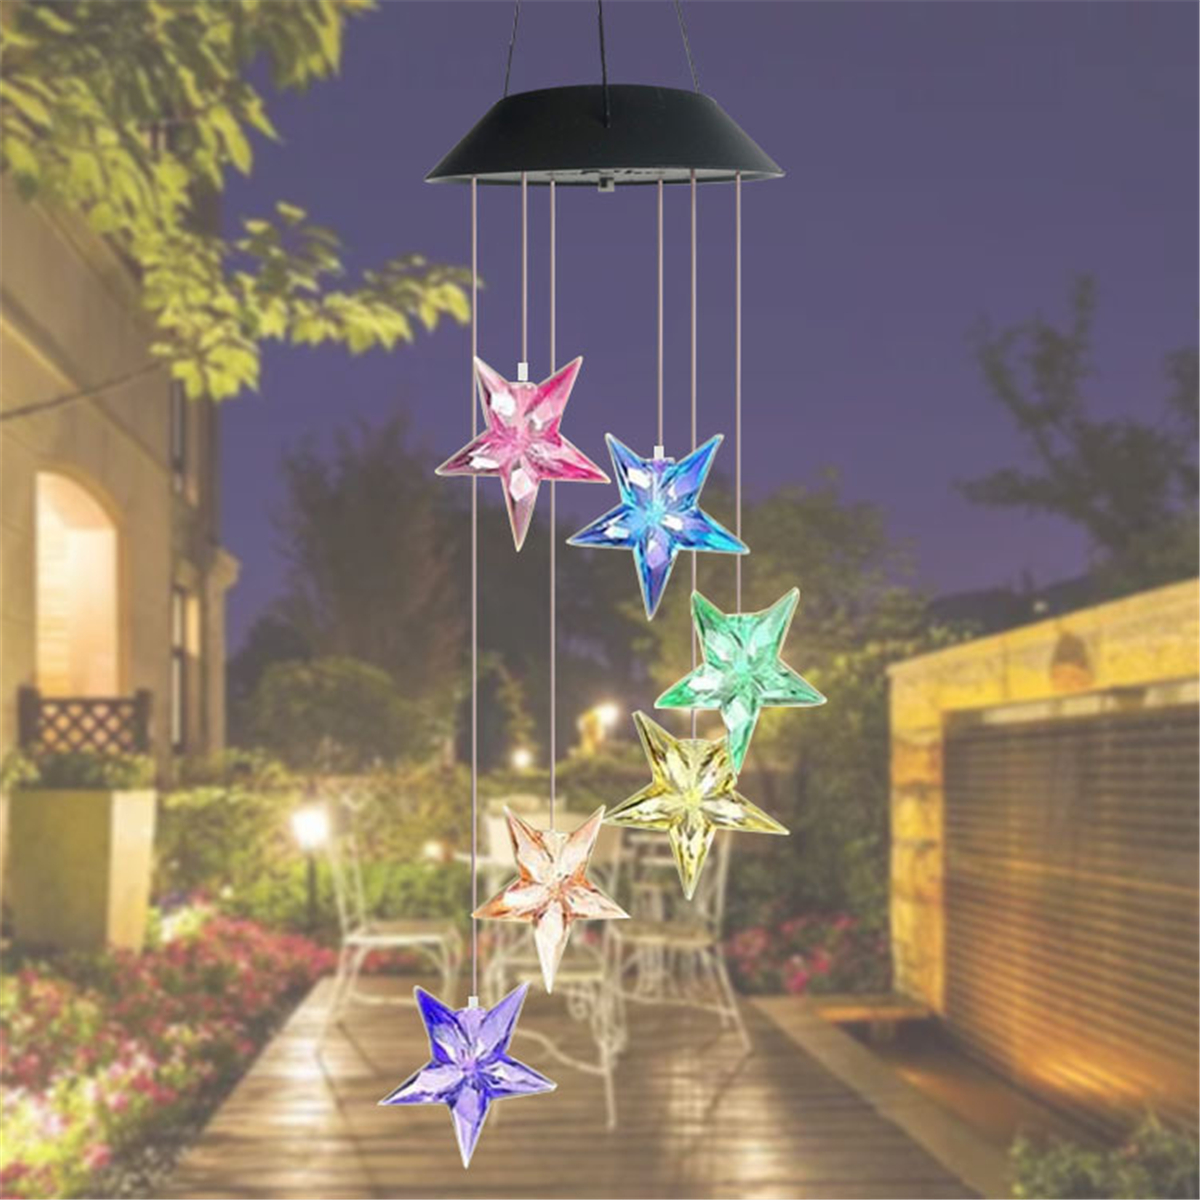 Solor-Powered-Star-Wind-Chime-Light-Outdoor-Garden-Waterproof-Hanging-Lamp-Decor-1698743-5